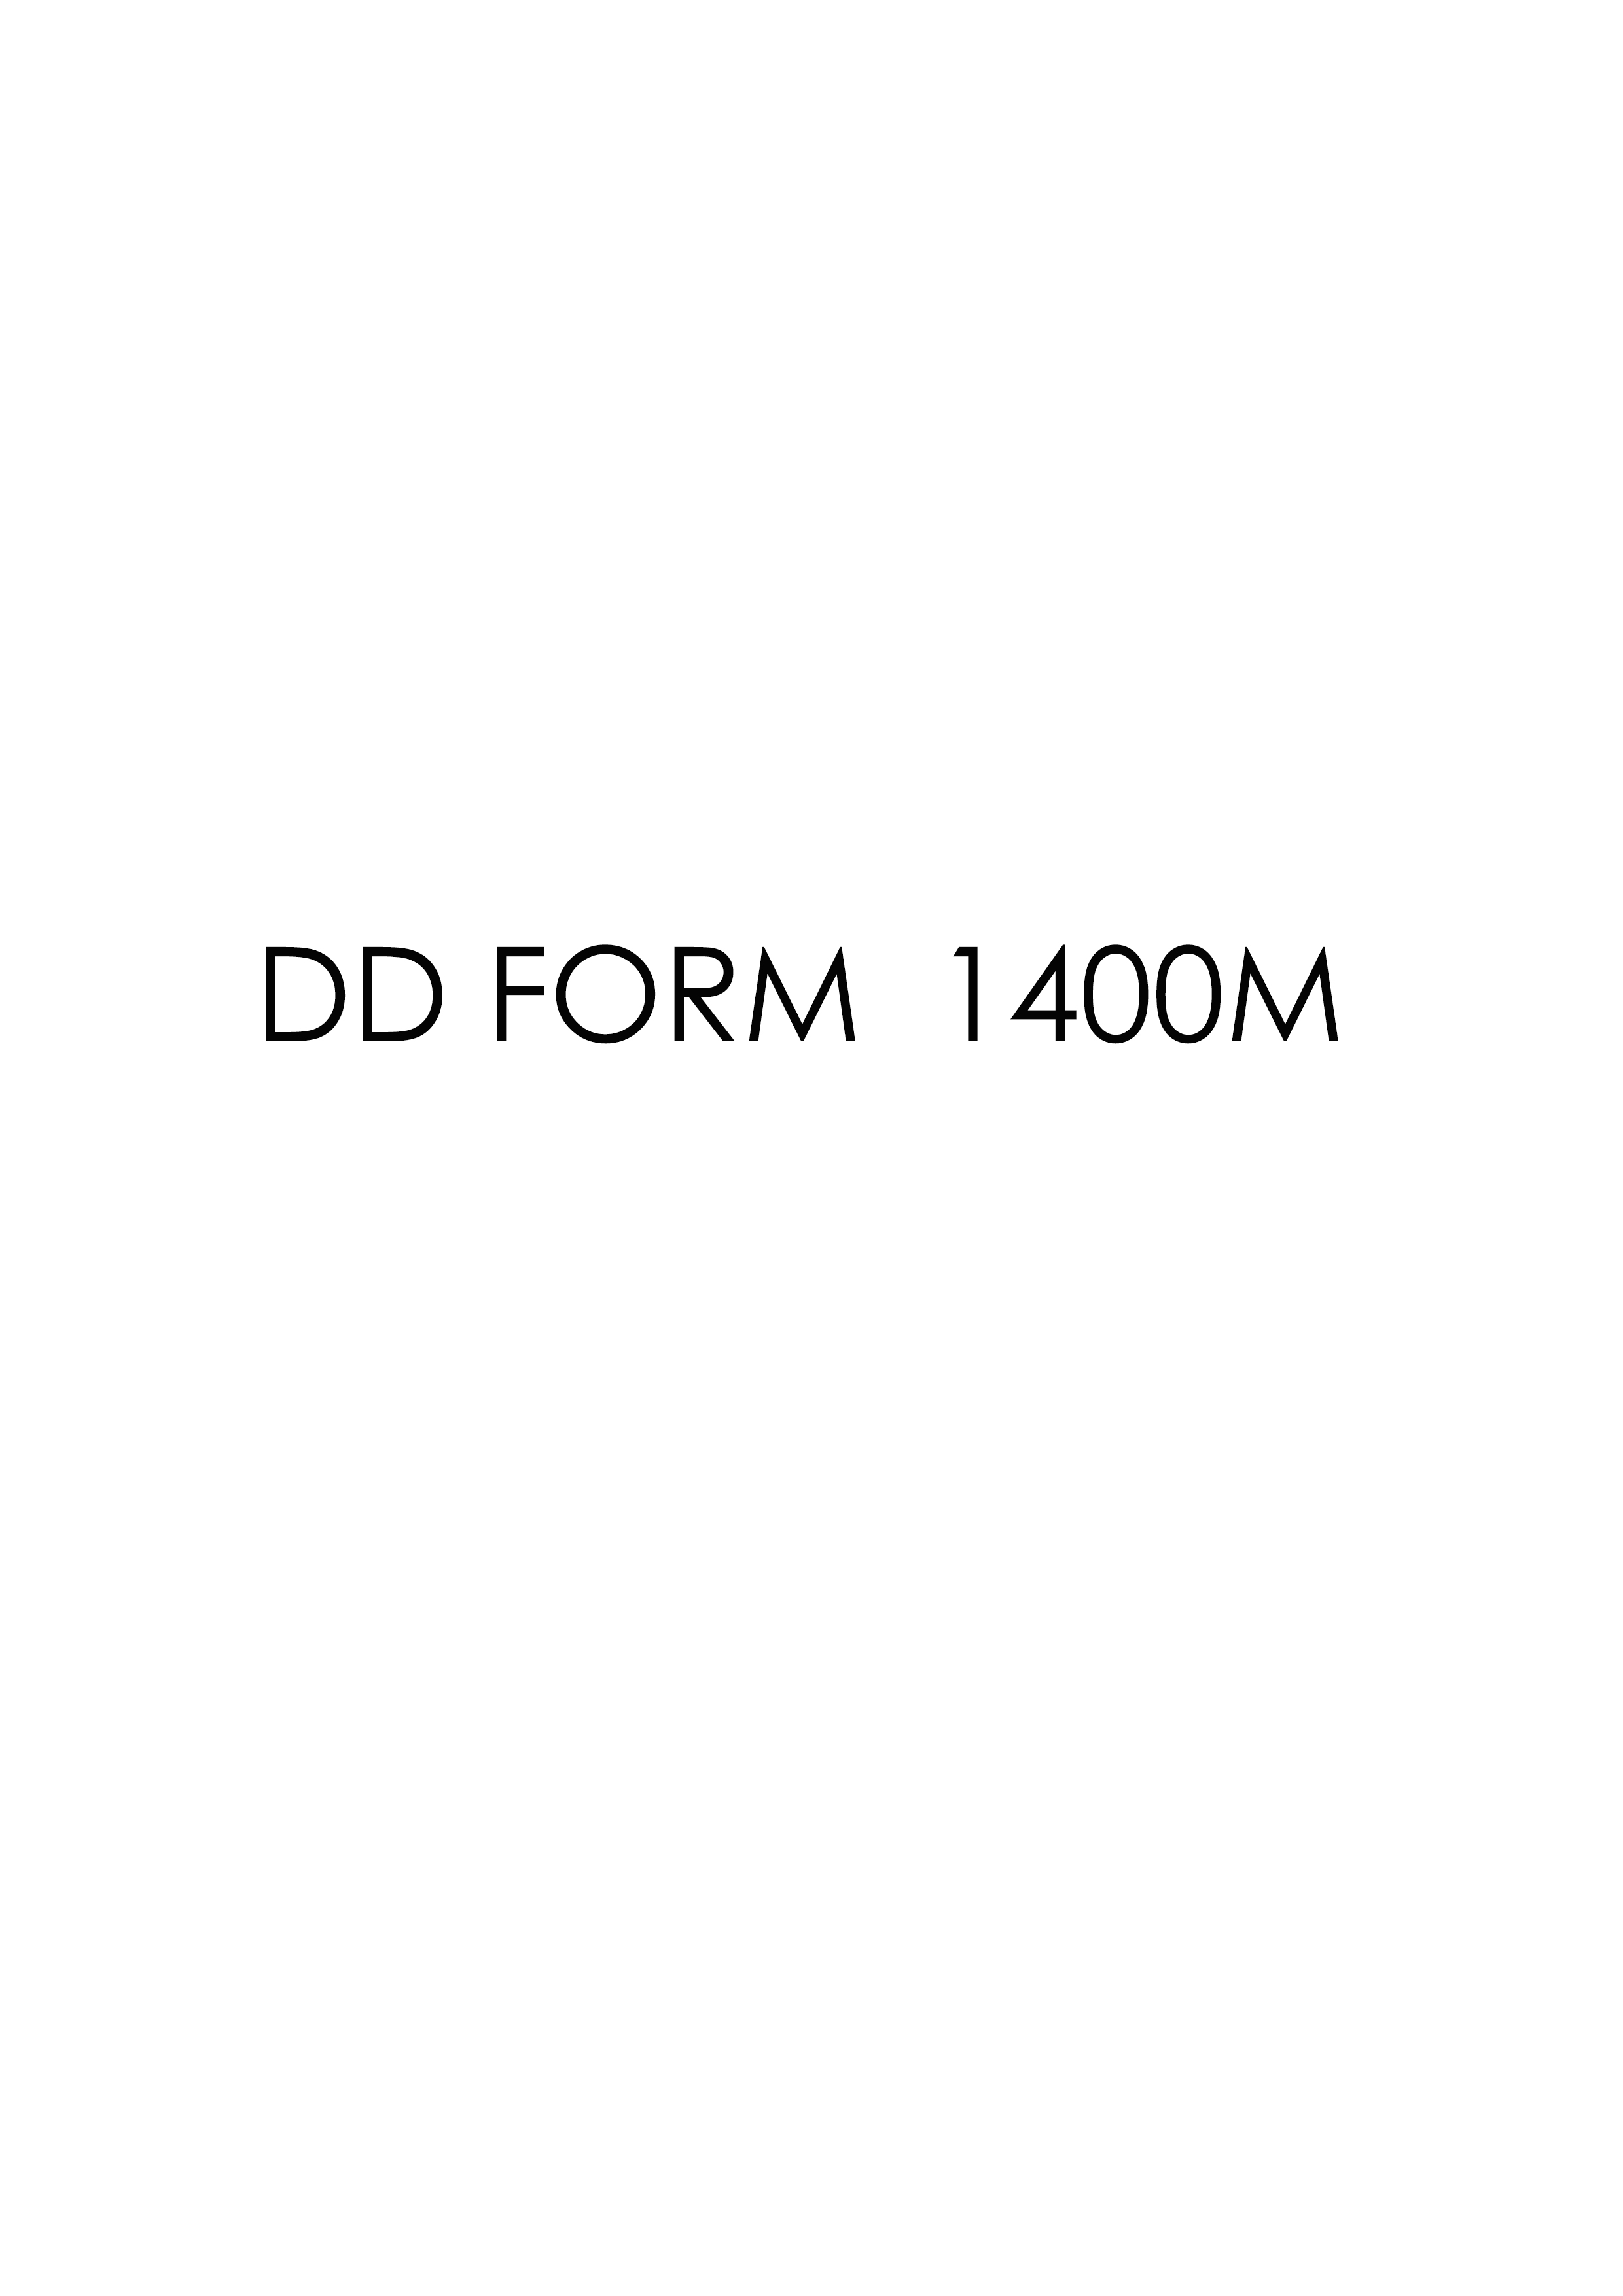 Download dd 1400M Form